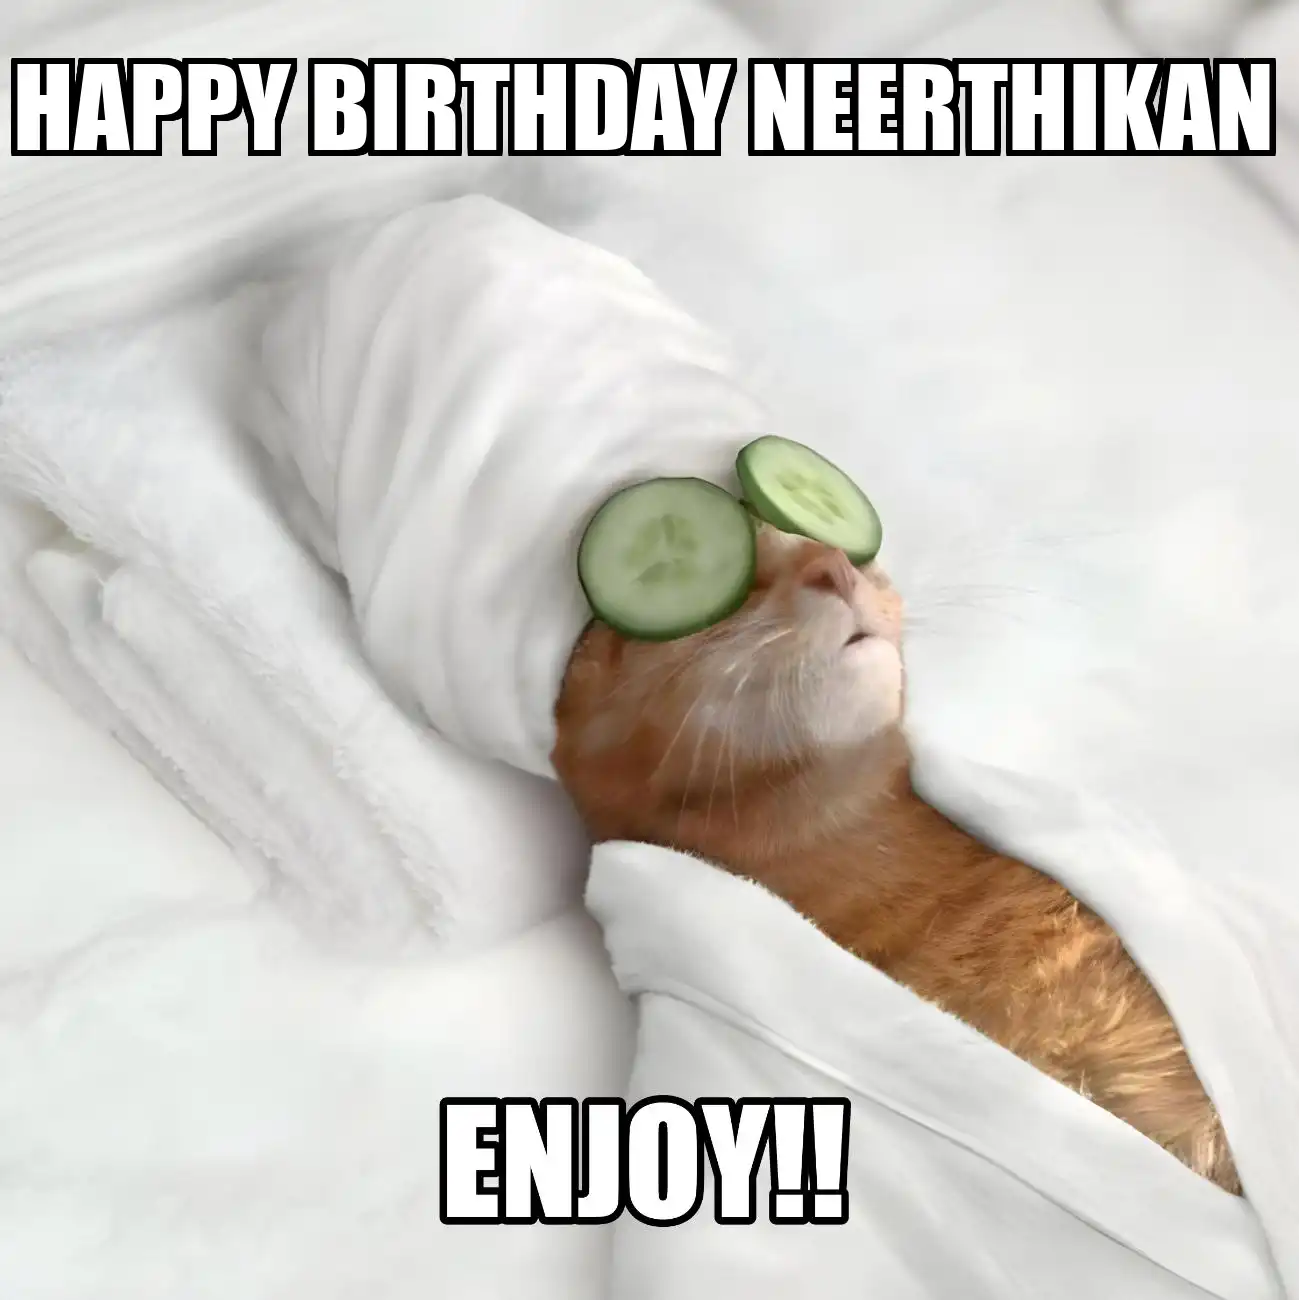 Happy Birthday Neerthikan Enjoy Cat Meme